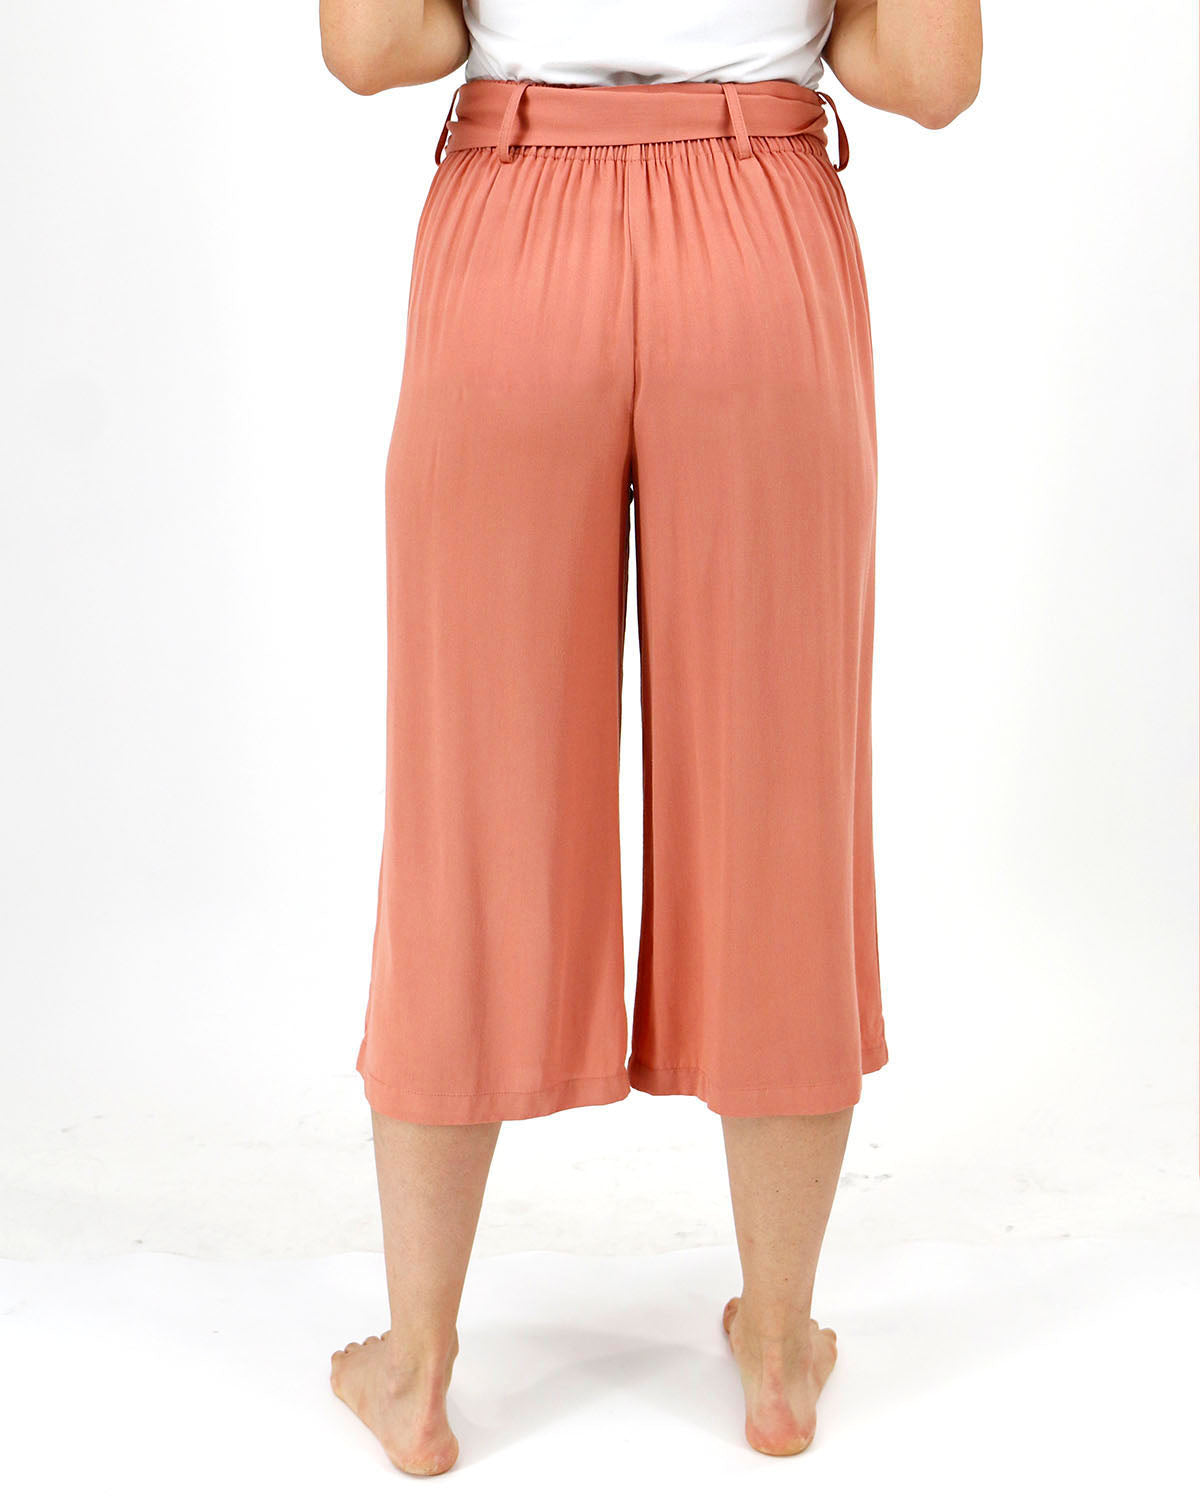 Flowy Culottes for Women Summer Wide-Leg Pants Comfortable